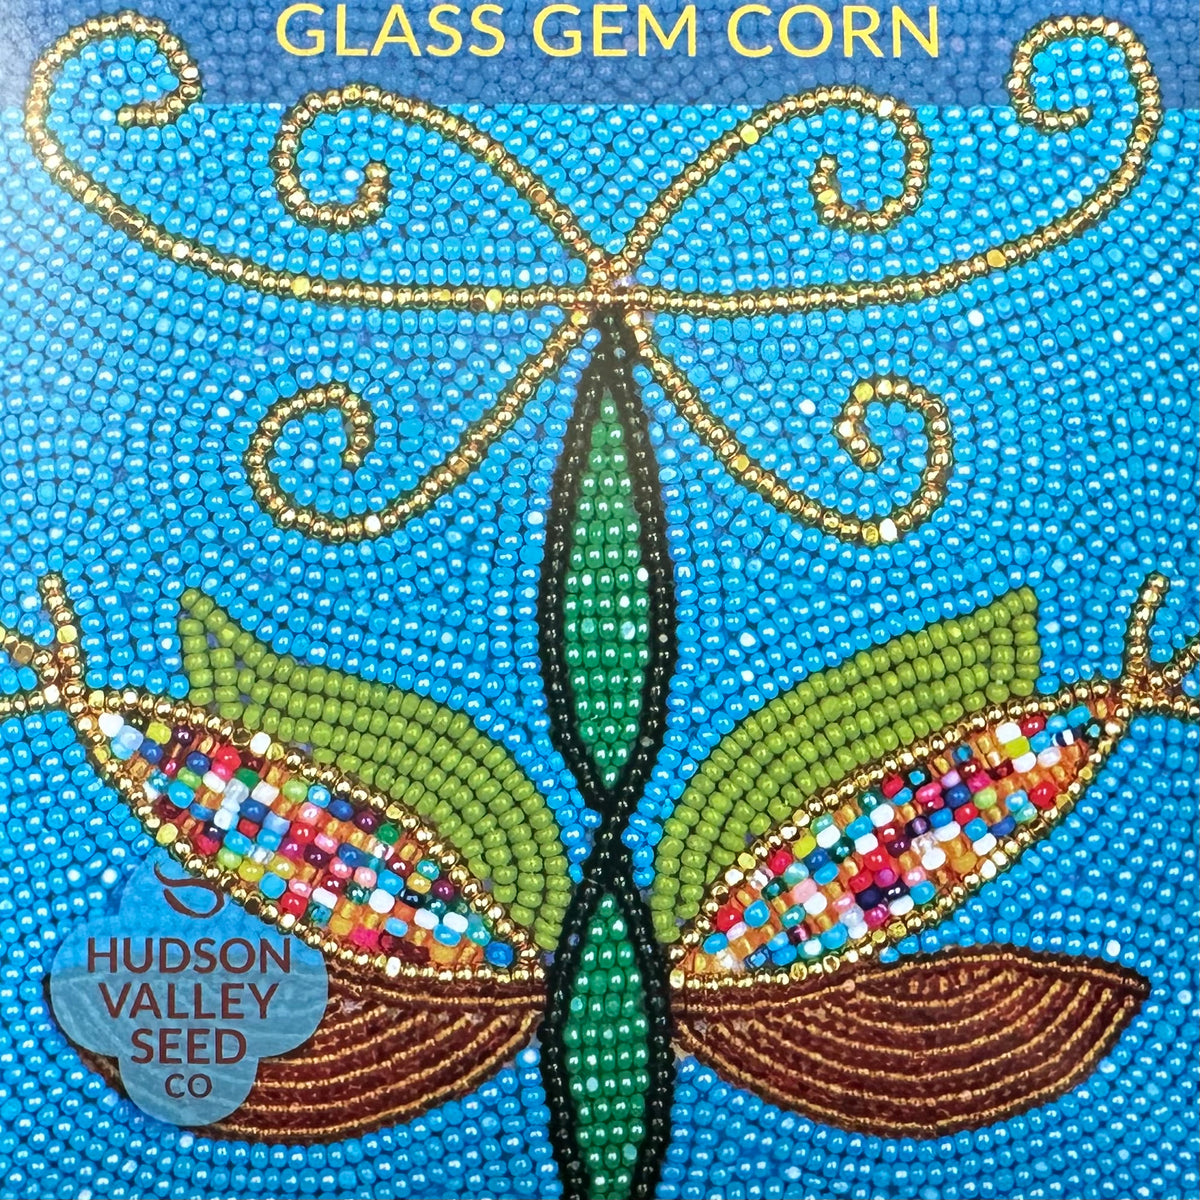 Glass Gem Corn Seeds